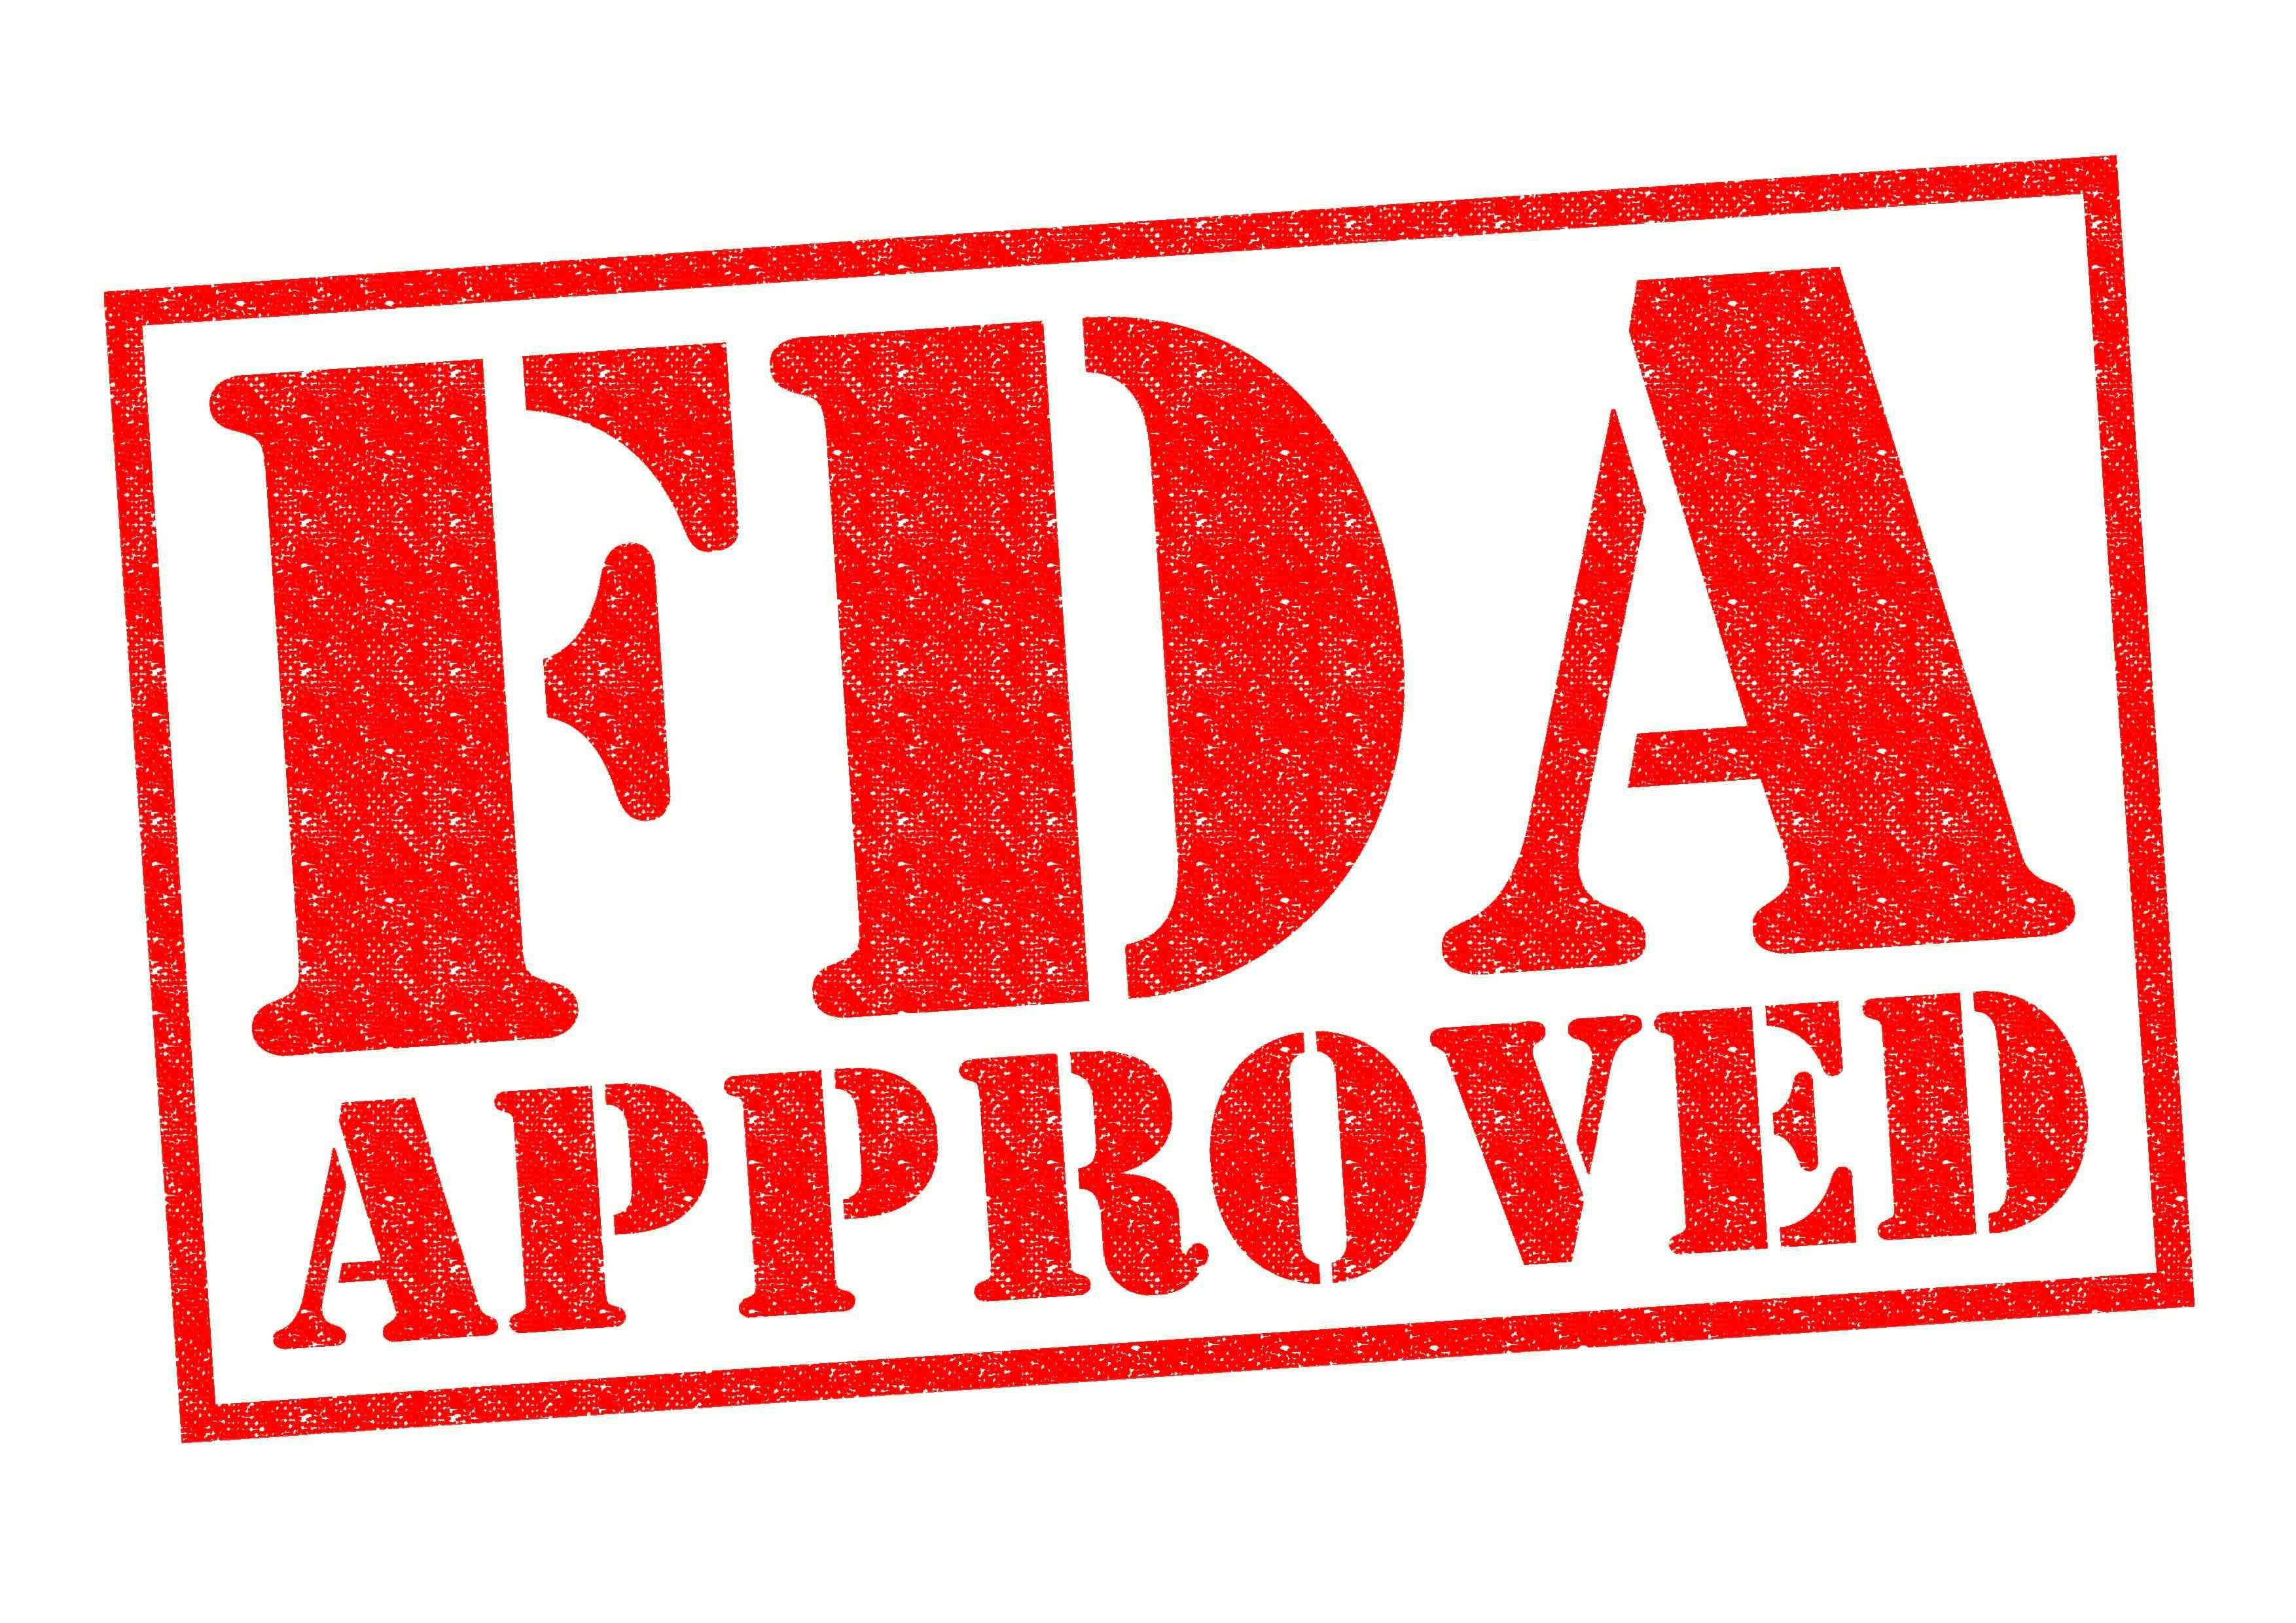 FDA Approved | Image credit: chrisdorney - stock.adobe.com